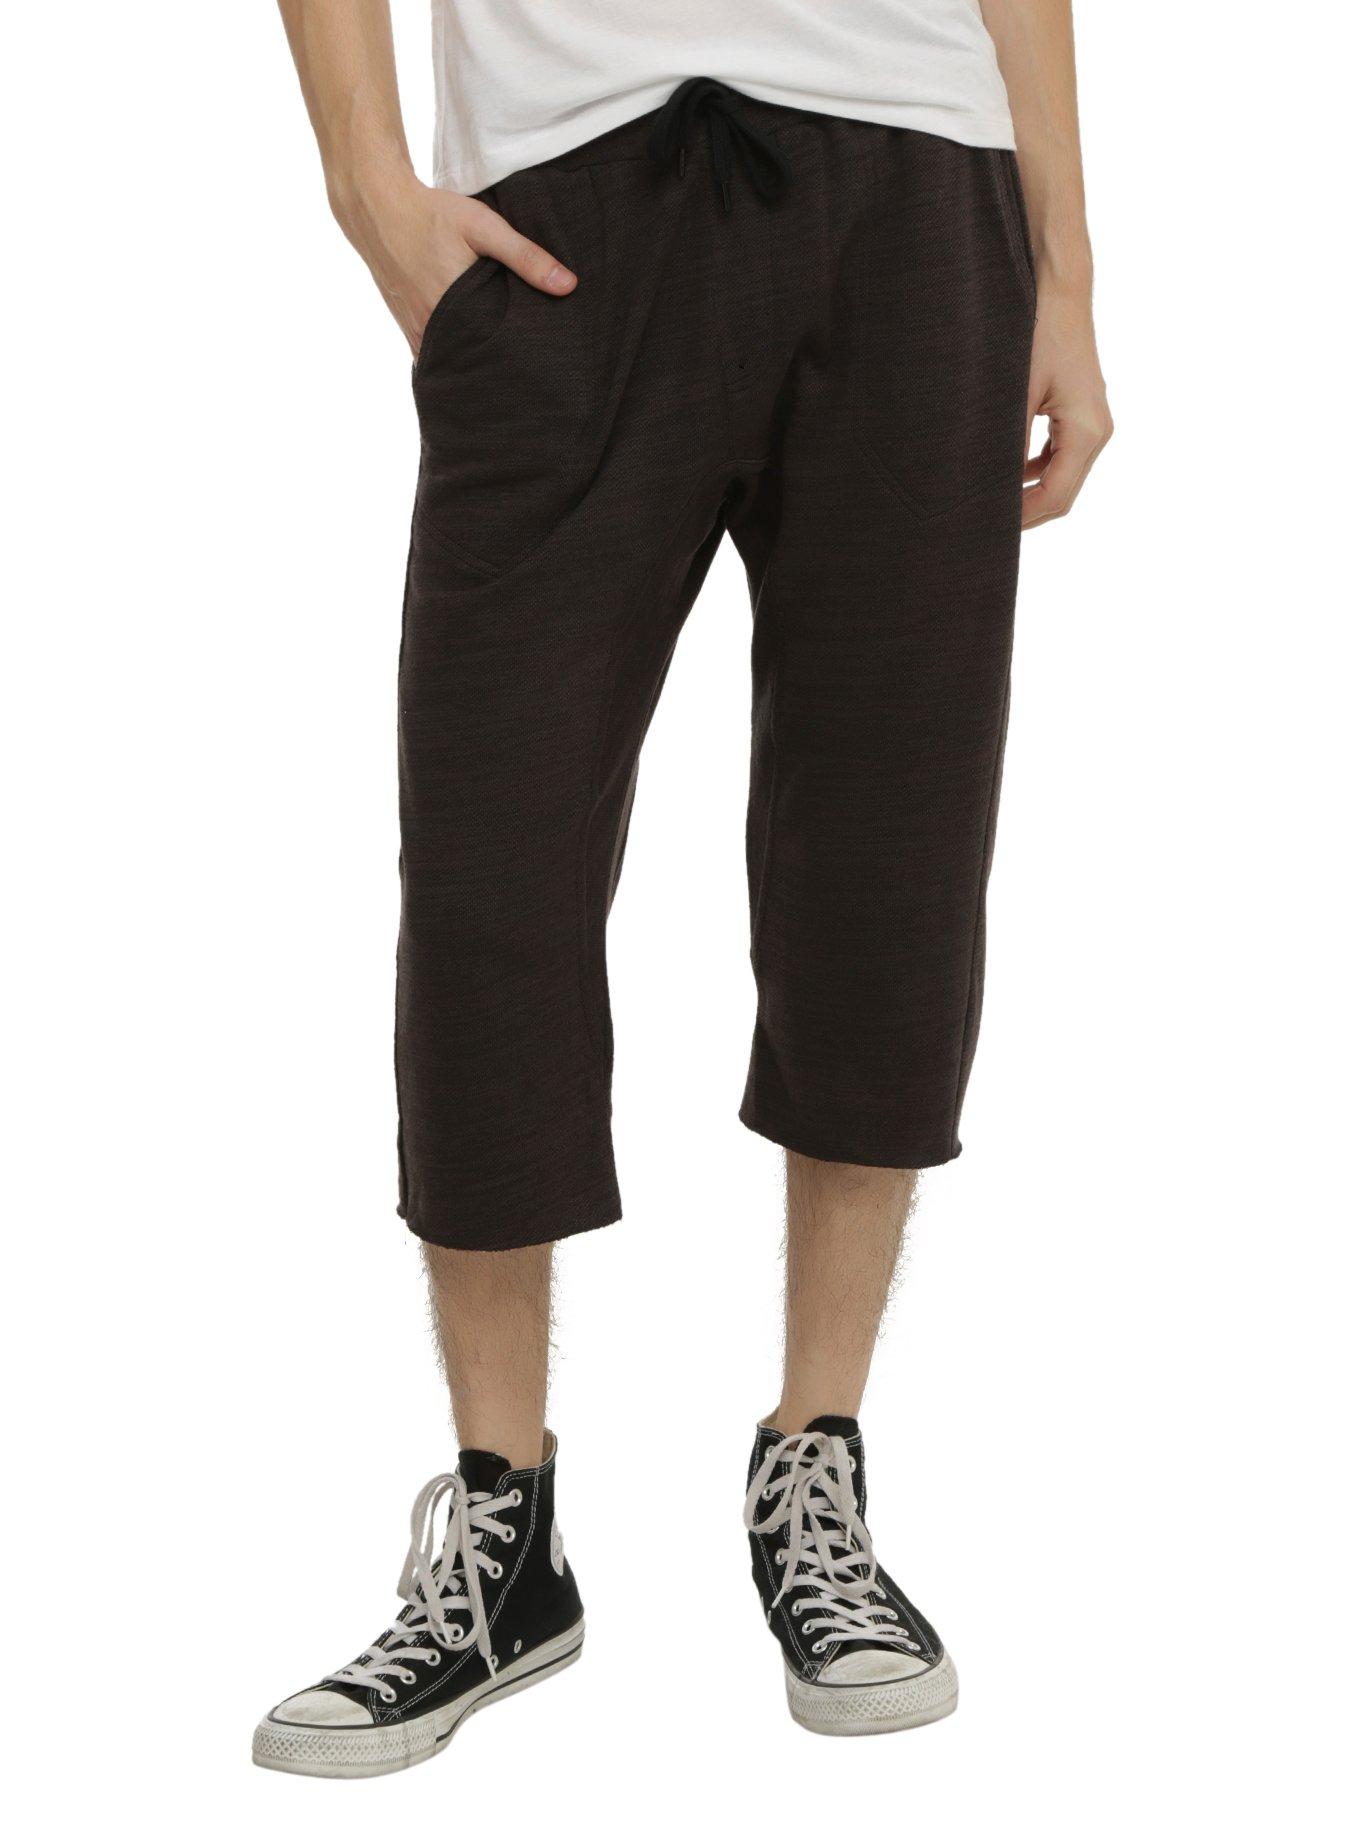 XXX RUDE Black Marled Knit Jogger Shorts, , hi-res